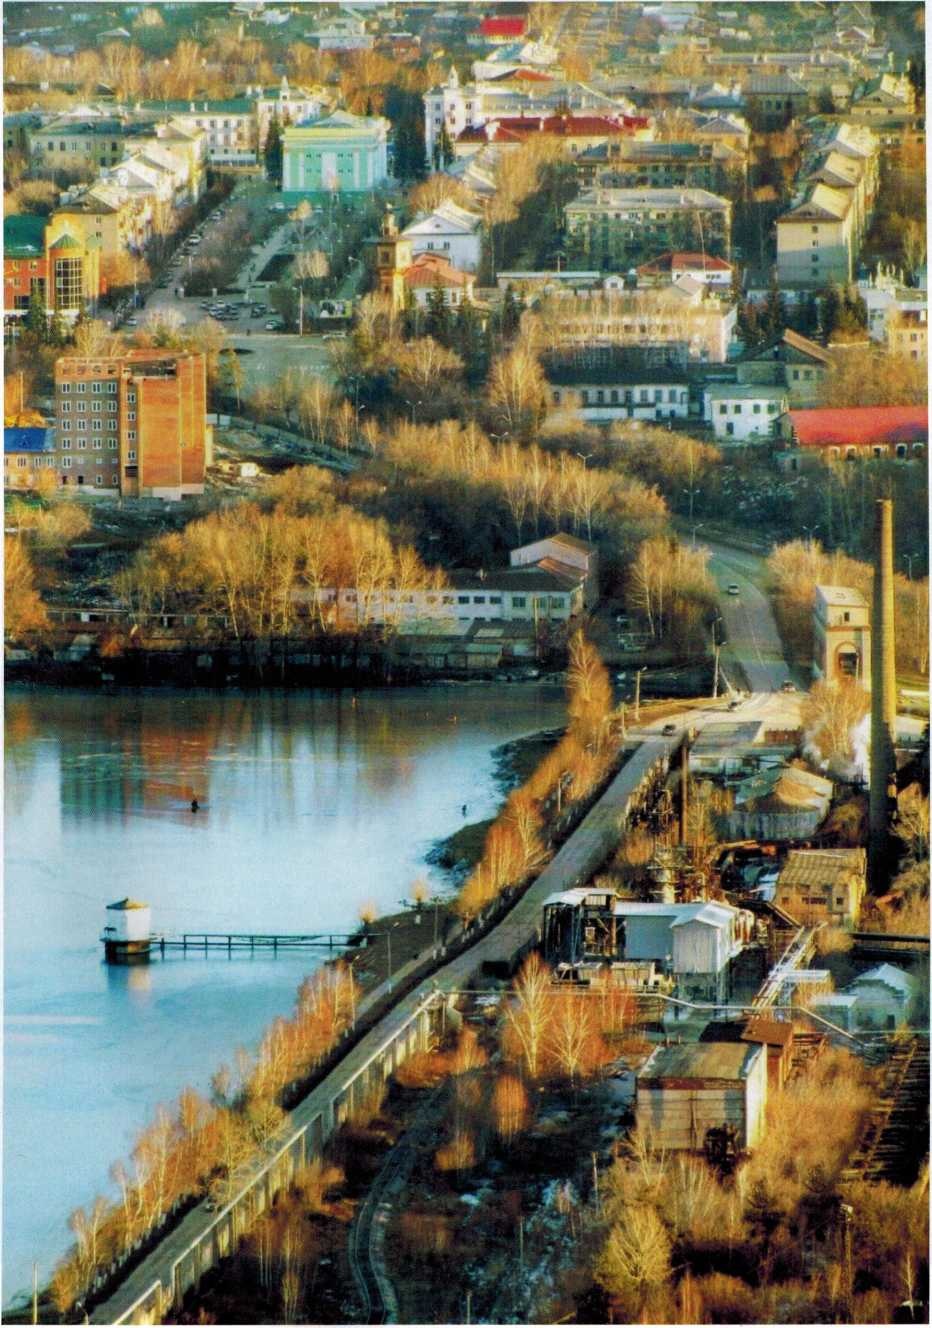 Вид на город и завод, фото О. Игиташева и А. Крепышева, 4 ноября 2014 года